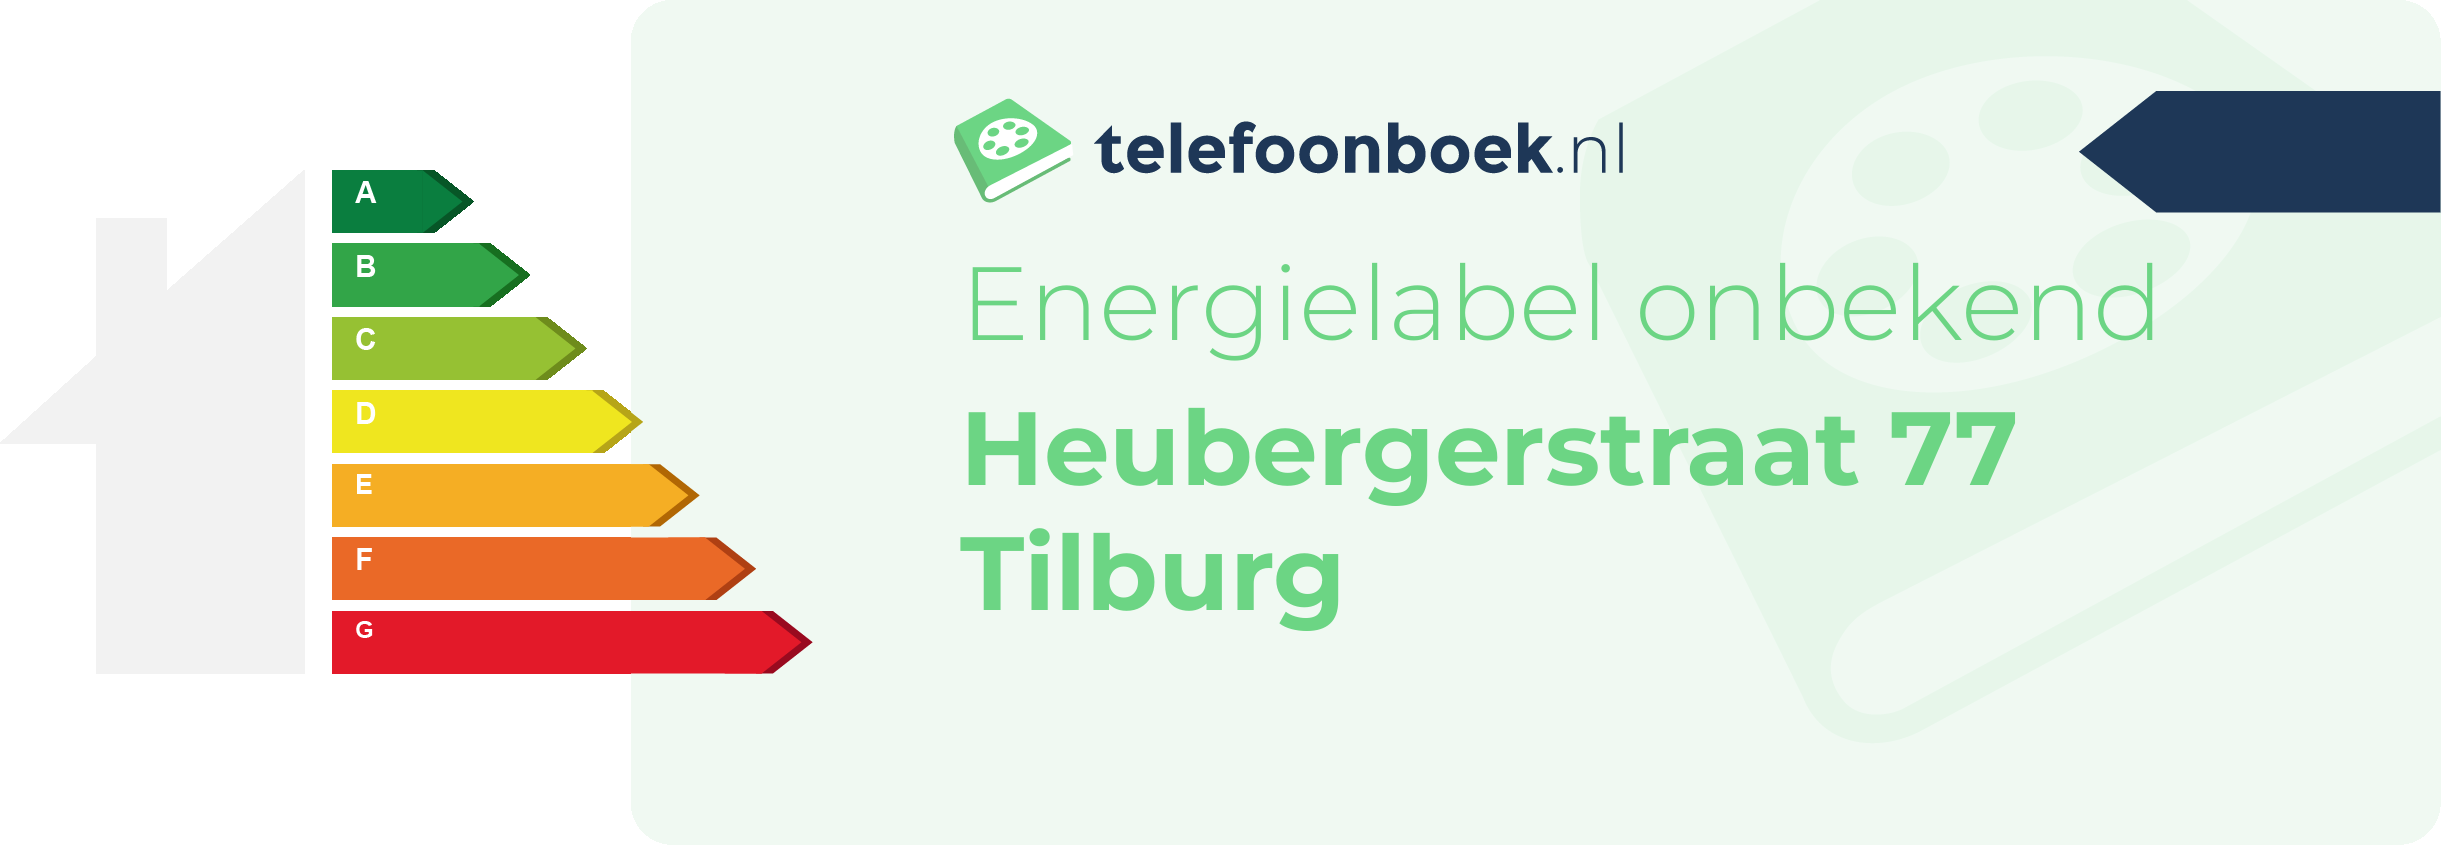 Energielabel Heubergerstraat 77 Tilburg